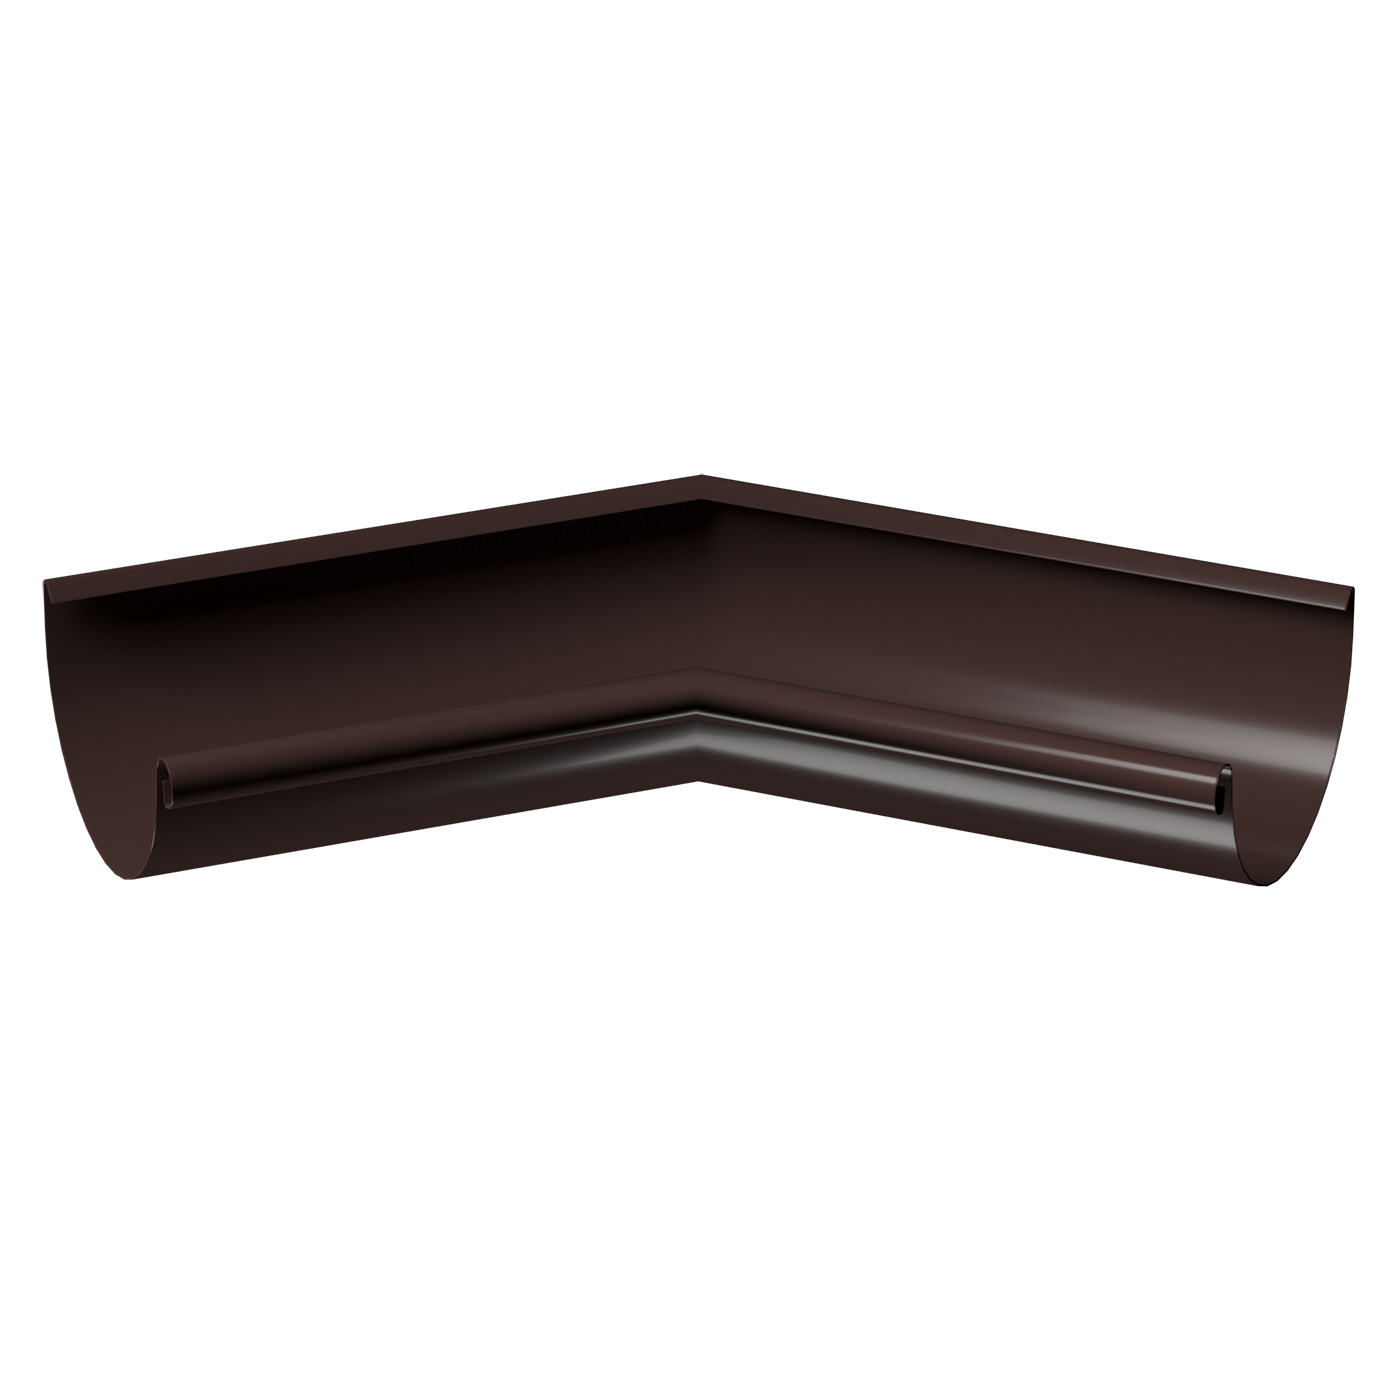 Заказать Внутренний угол желоба 135˚ Stal Premium, шоколад